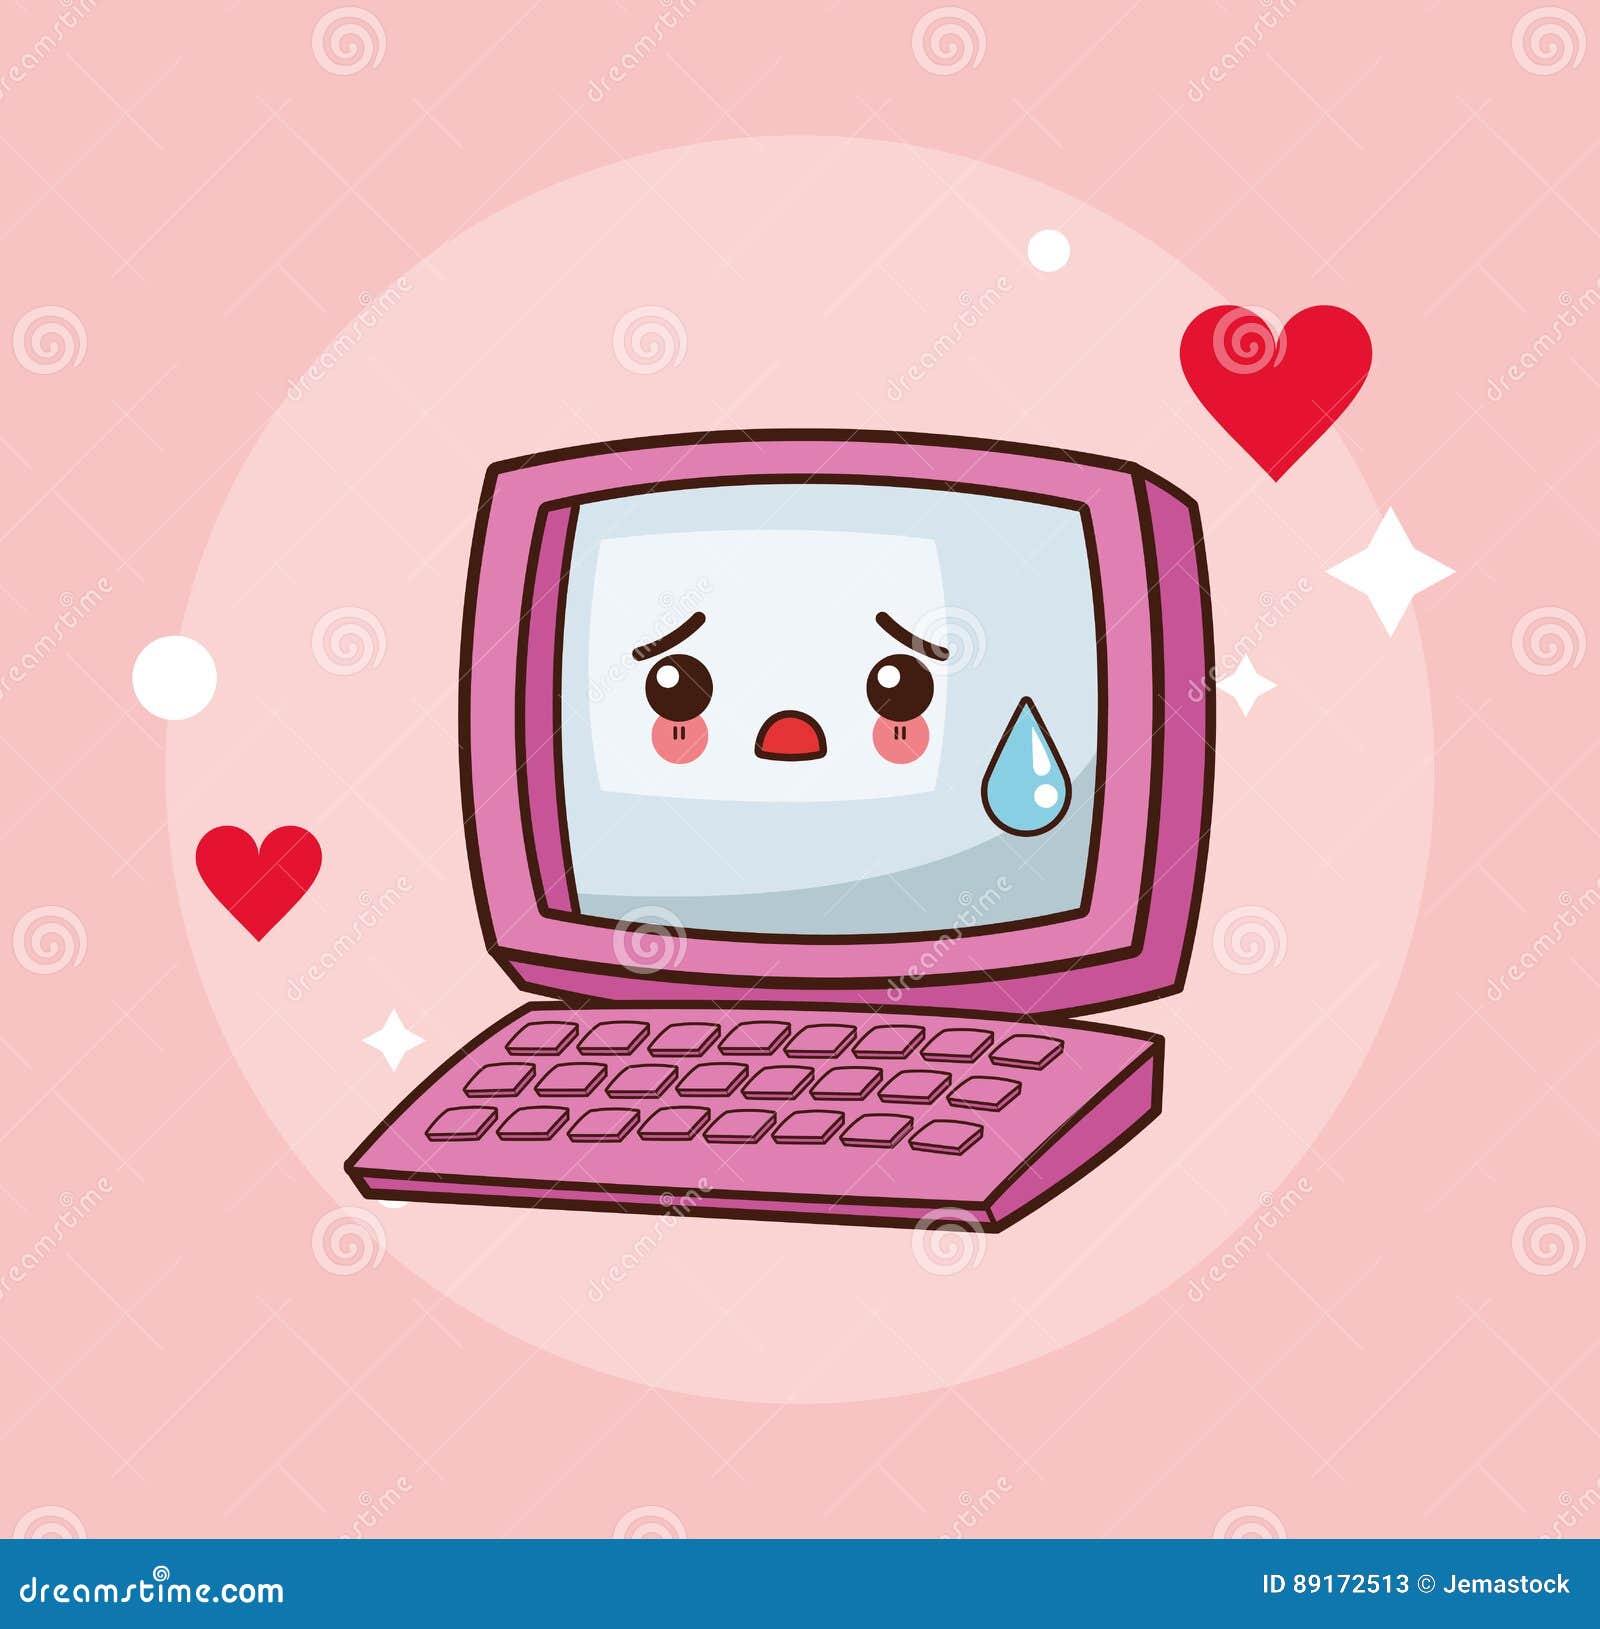 Kawaii computer cry image stock illustration. Illustration of adorable ...